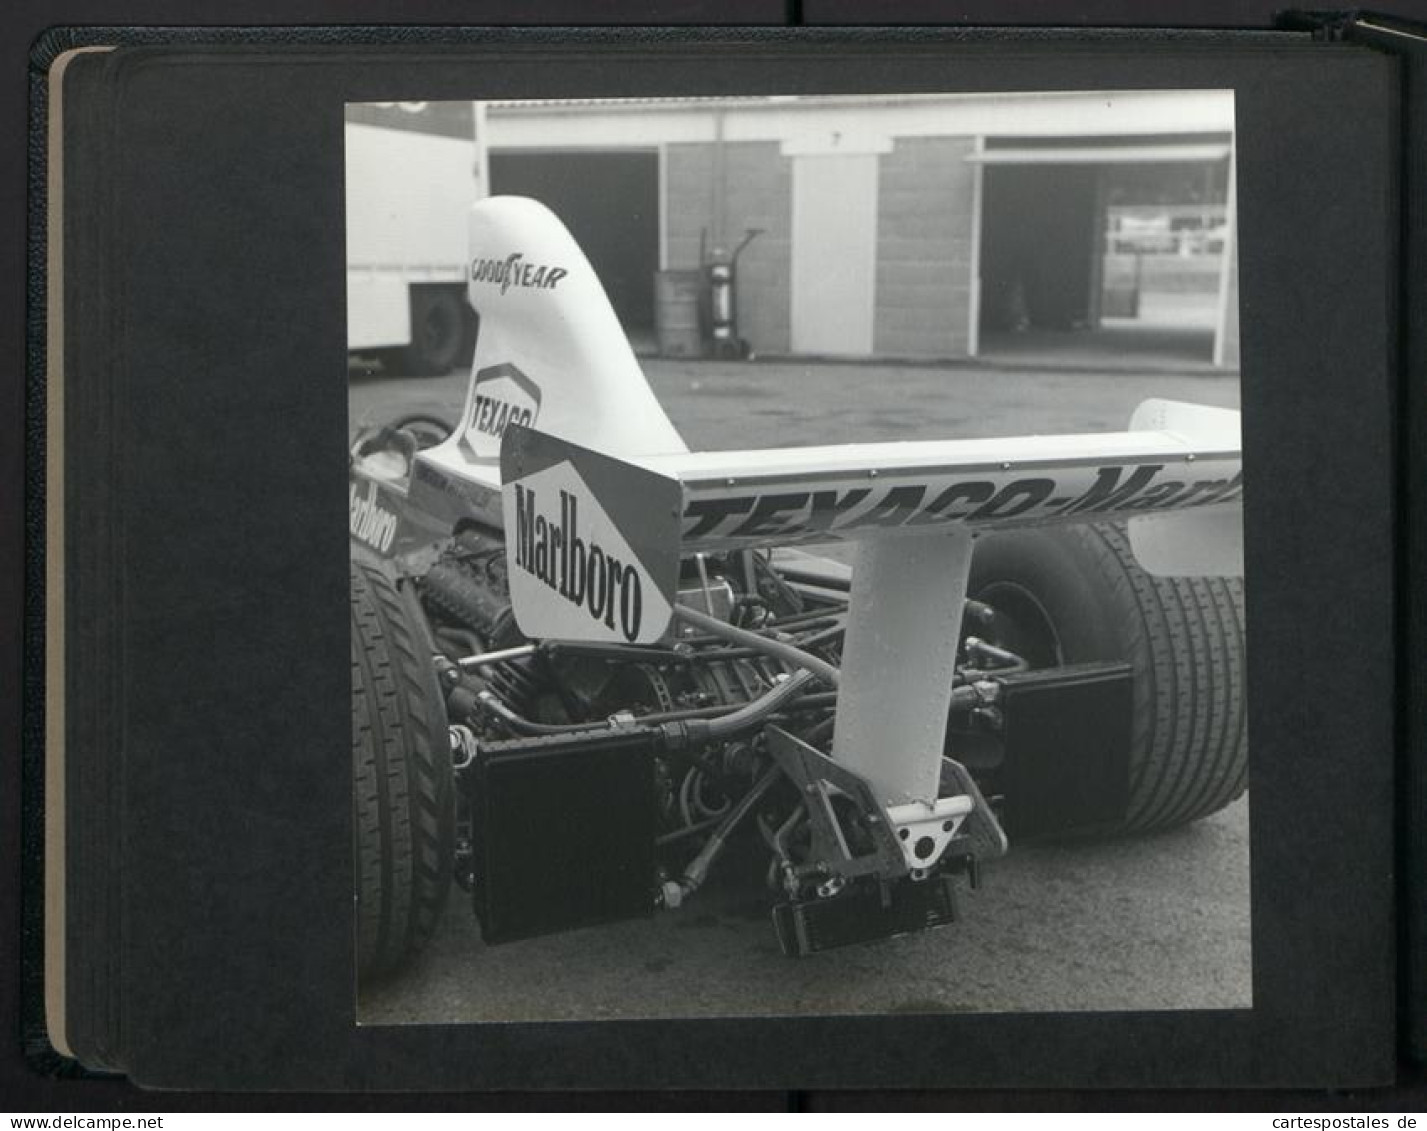 Fotoalbum mit 79 Fotografien John Player Grand Prix Silverstone 1973-1977, Ferrari, Tyrrell Ford, Brabham, BMW, Porche 